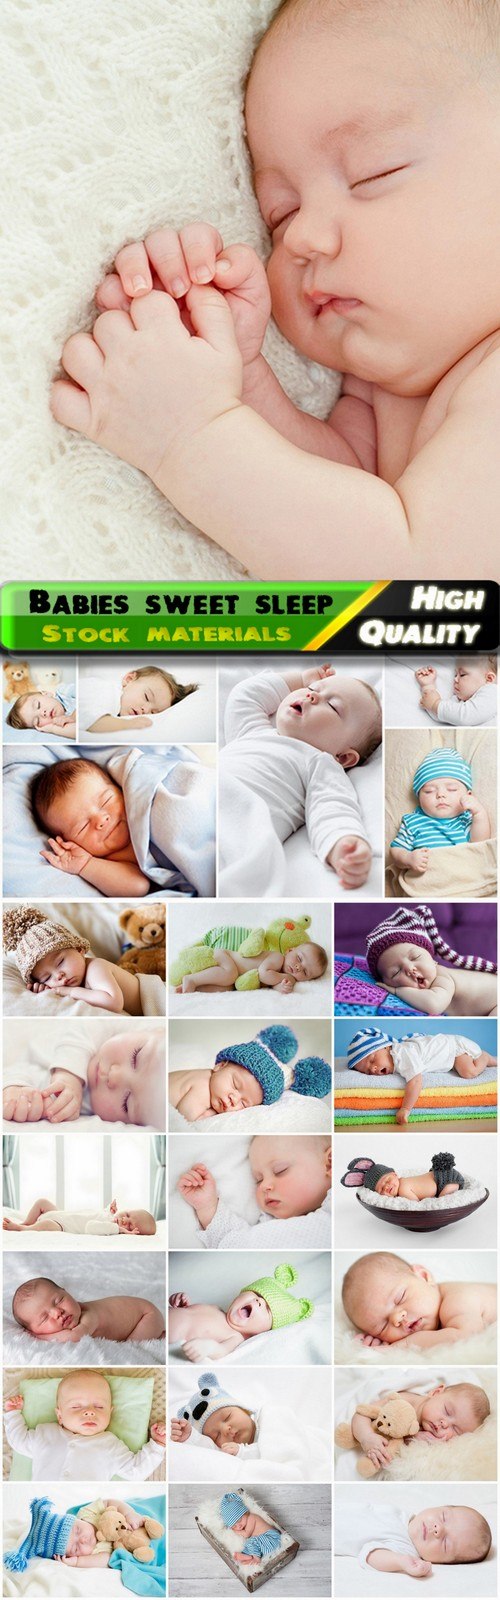 Cute funny babies sweet sleep - 25 HQ Jpg